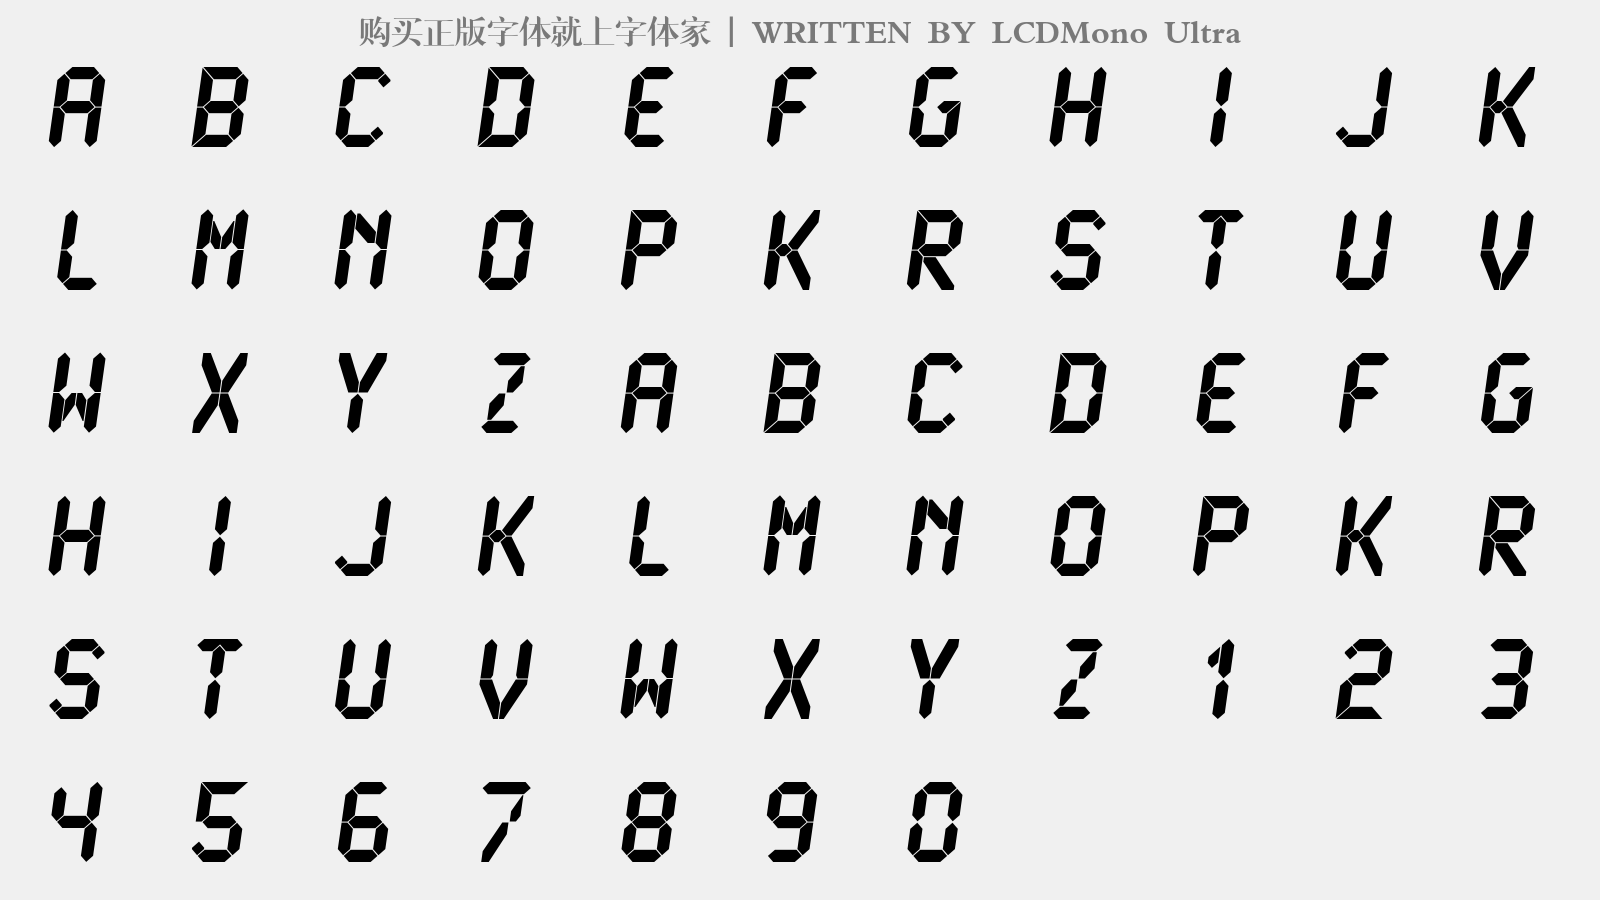 LCDMono Ultra - 大写字母/小写字母/数字